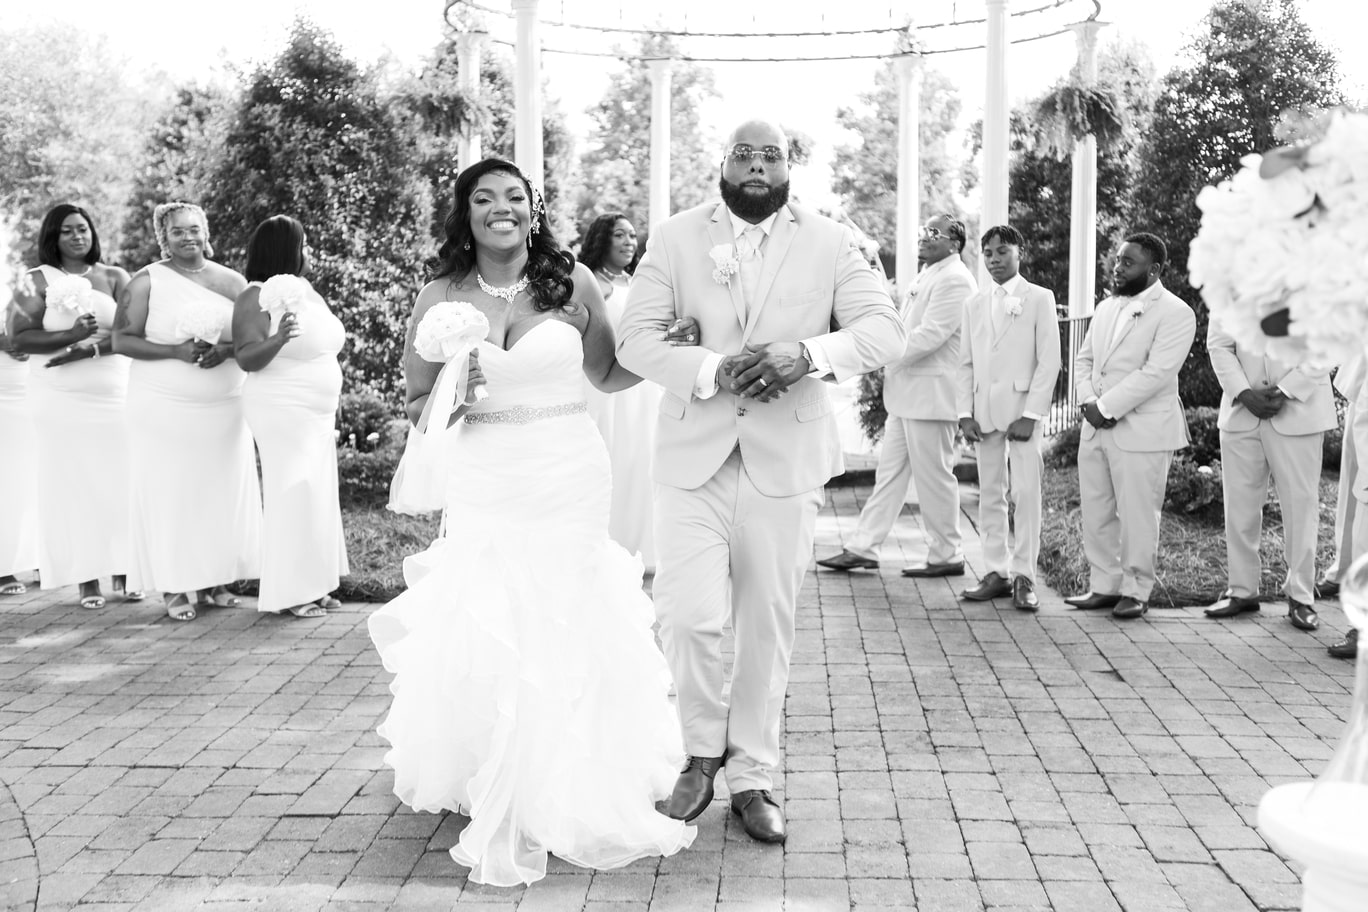 Image of Mr & Mrs. Navarro walking from wedding ceremony